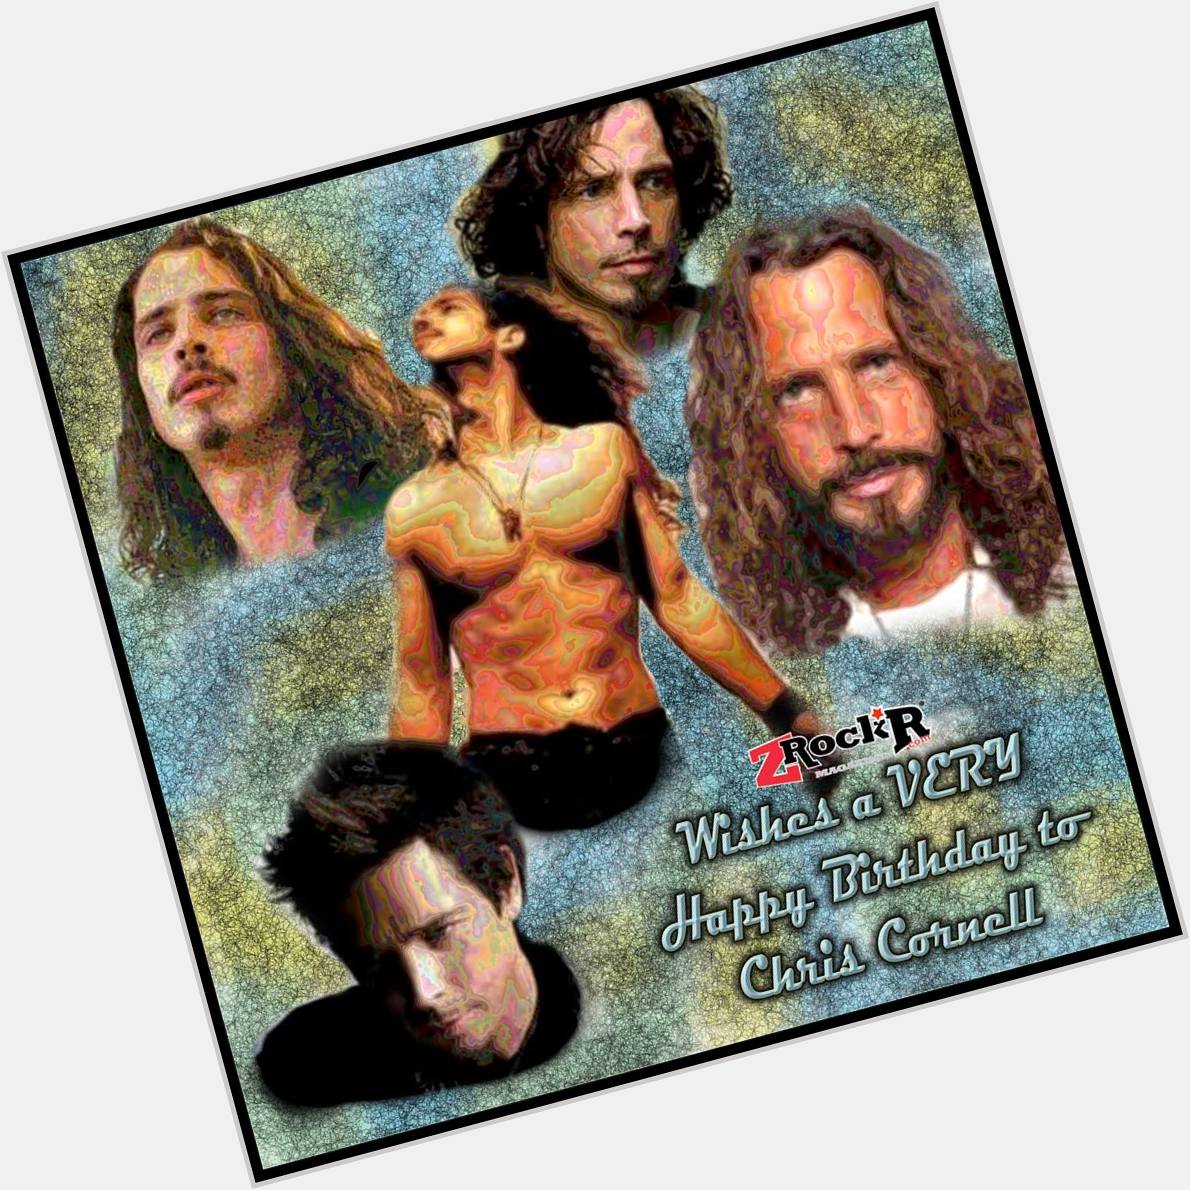 ZRock\R Wishes a very Happy Birthday to Chris Cornell!  